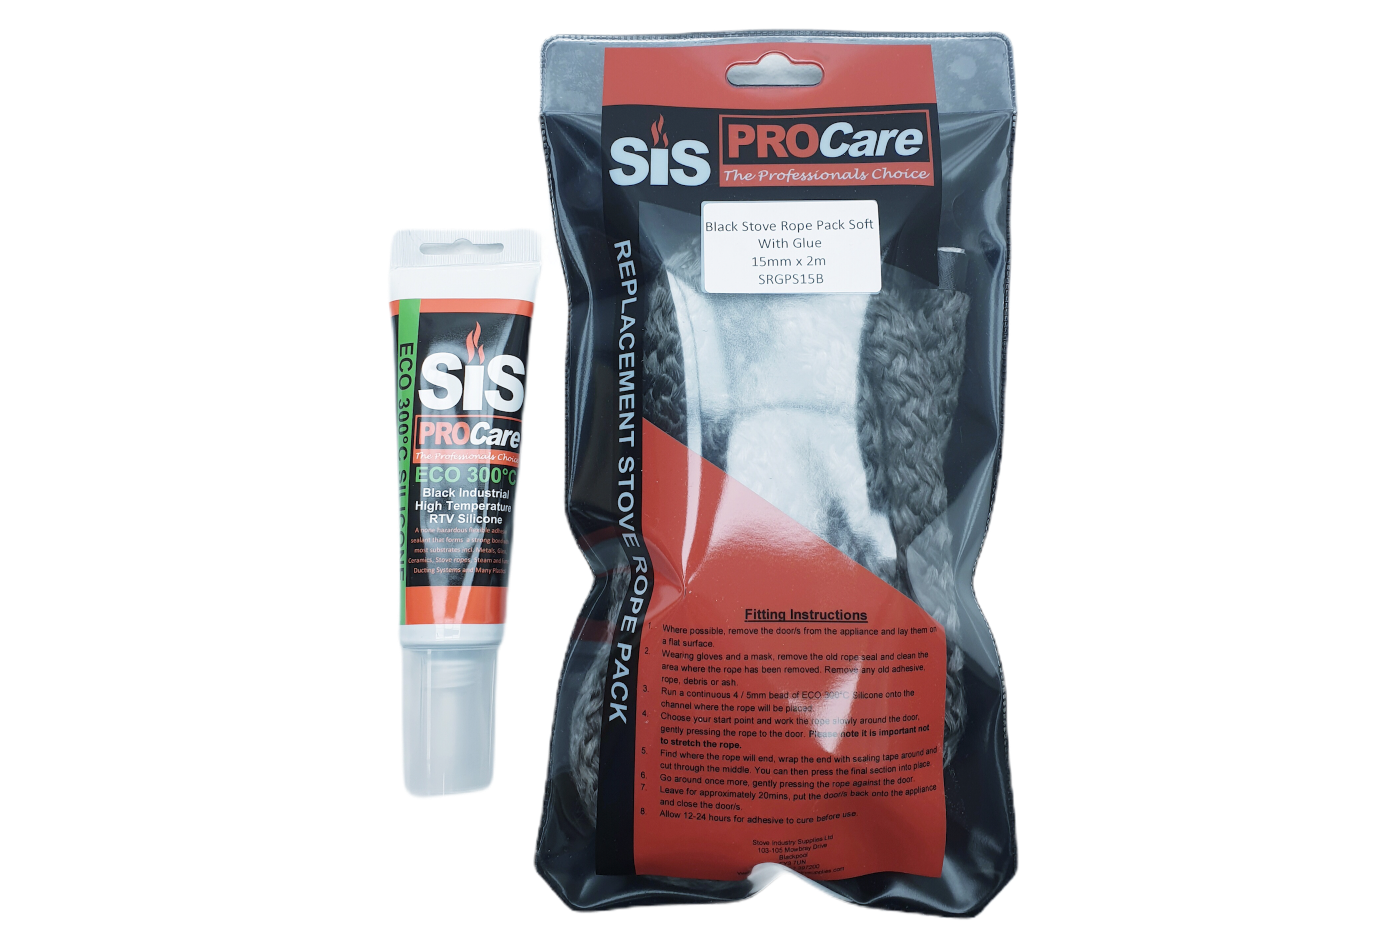 SiS Procare Black 15 milimetre x 2 metre Black Soft Stove Rope & 80 millilitre Rope Glue Pack - product code SRGPS15B